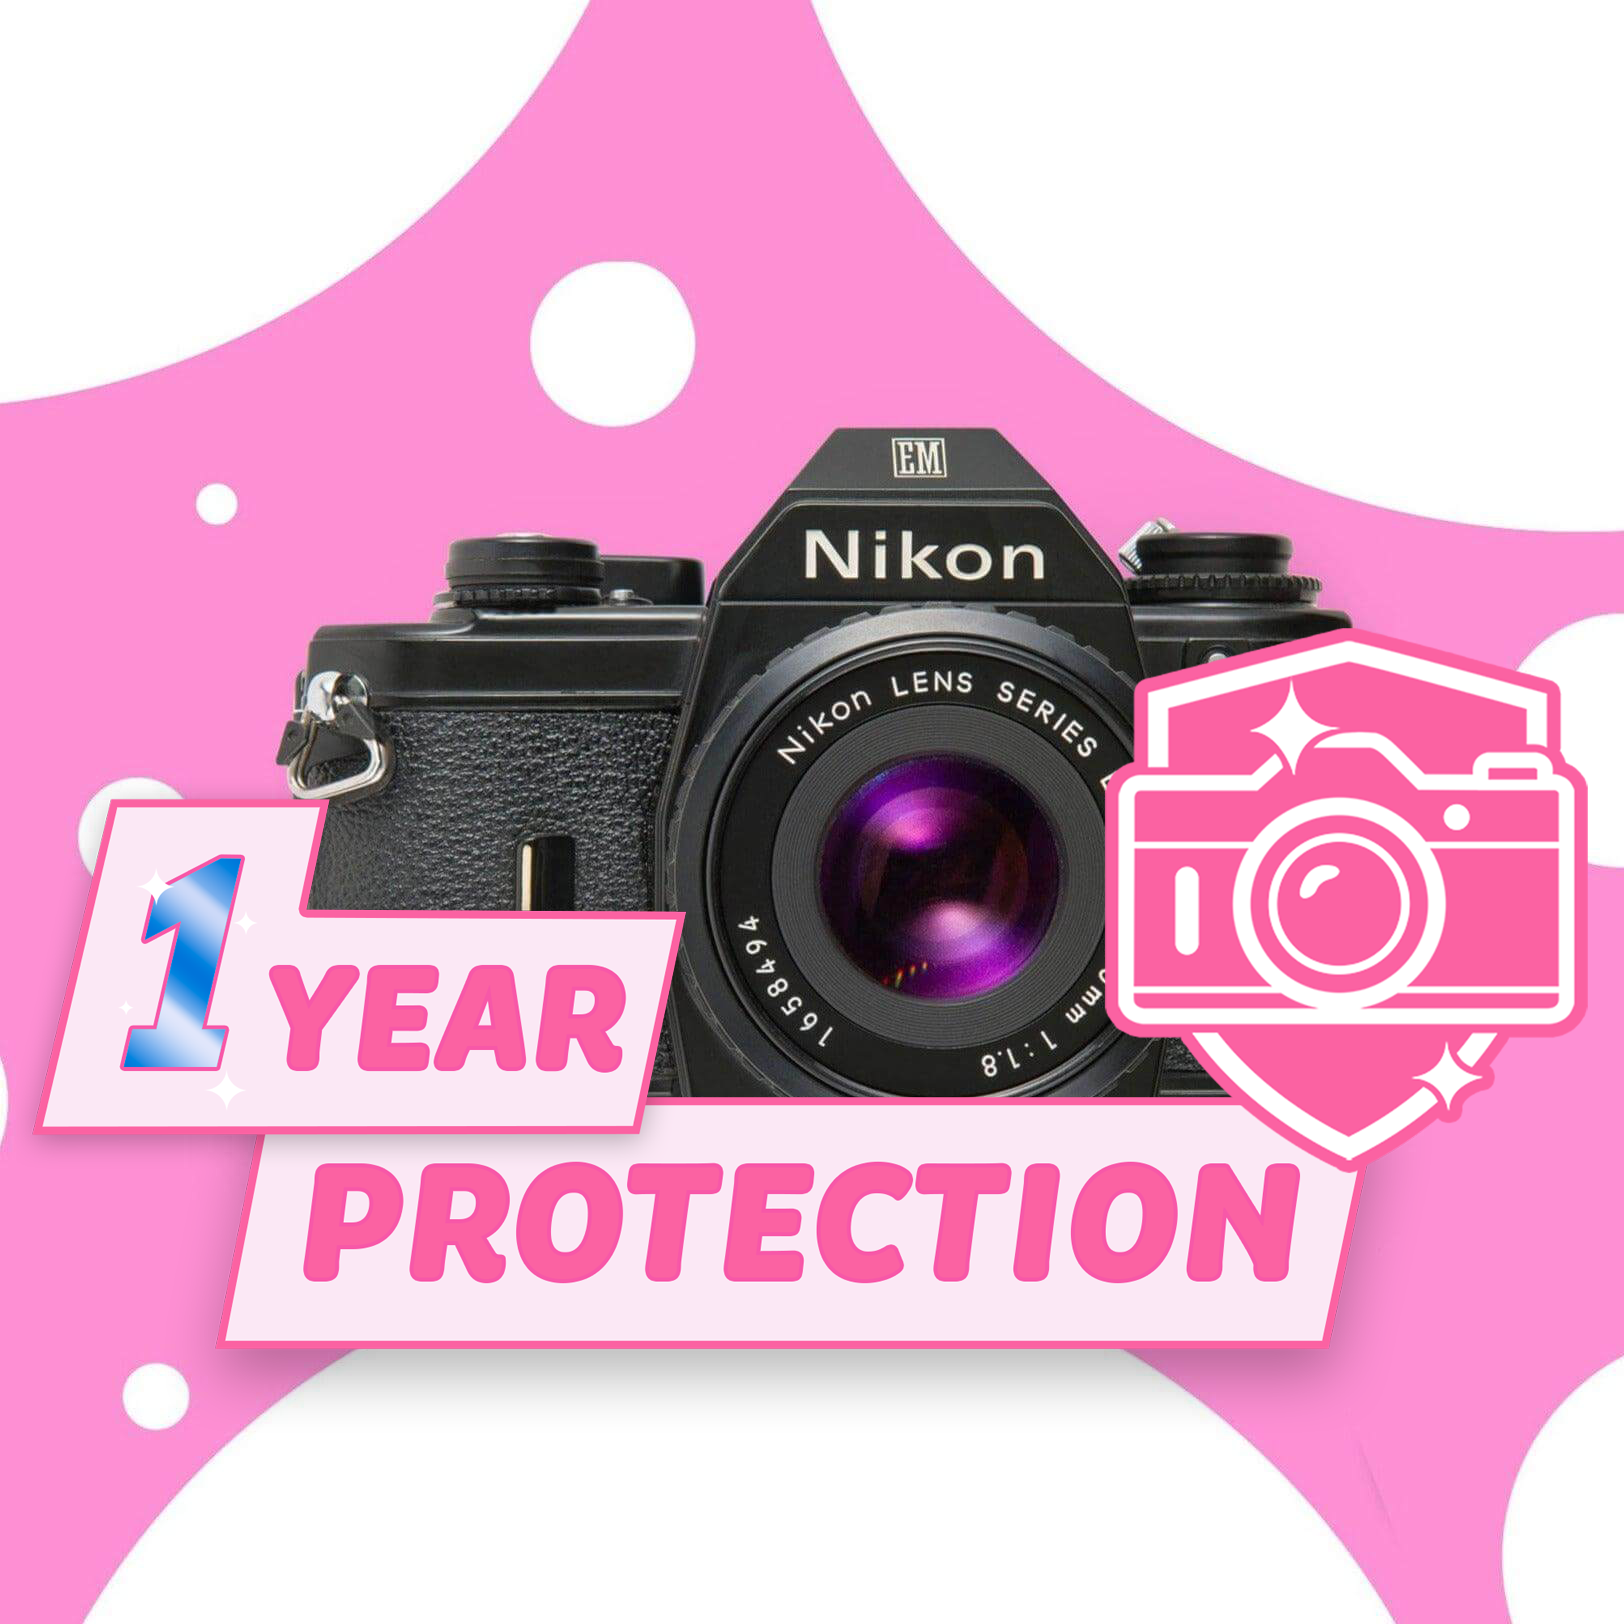 Camera Protection Plan for Nikon EM